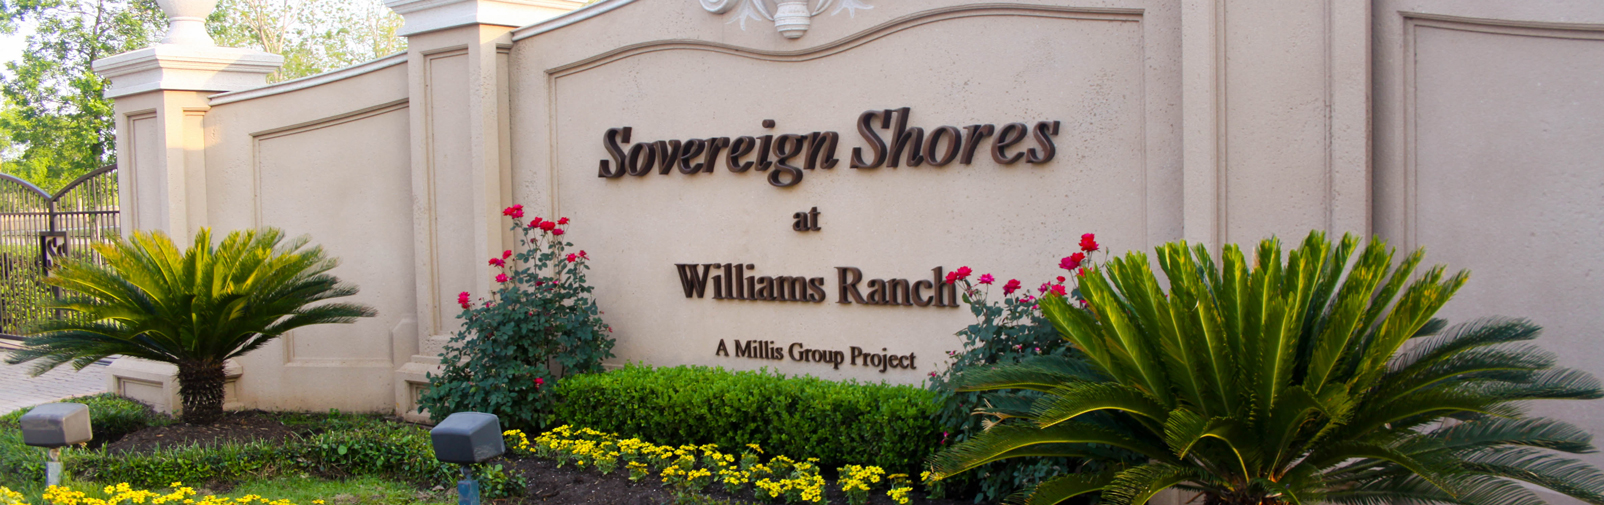 Sovereign Shores at Willams Ranch